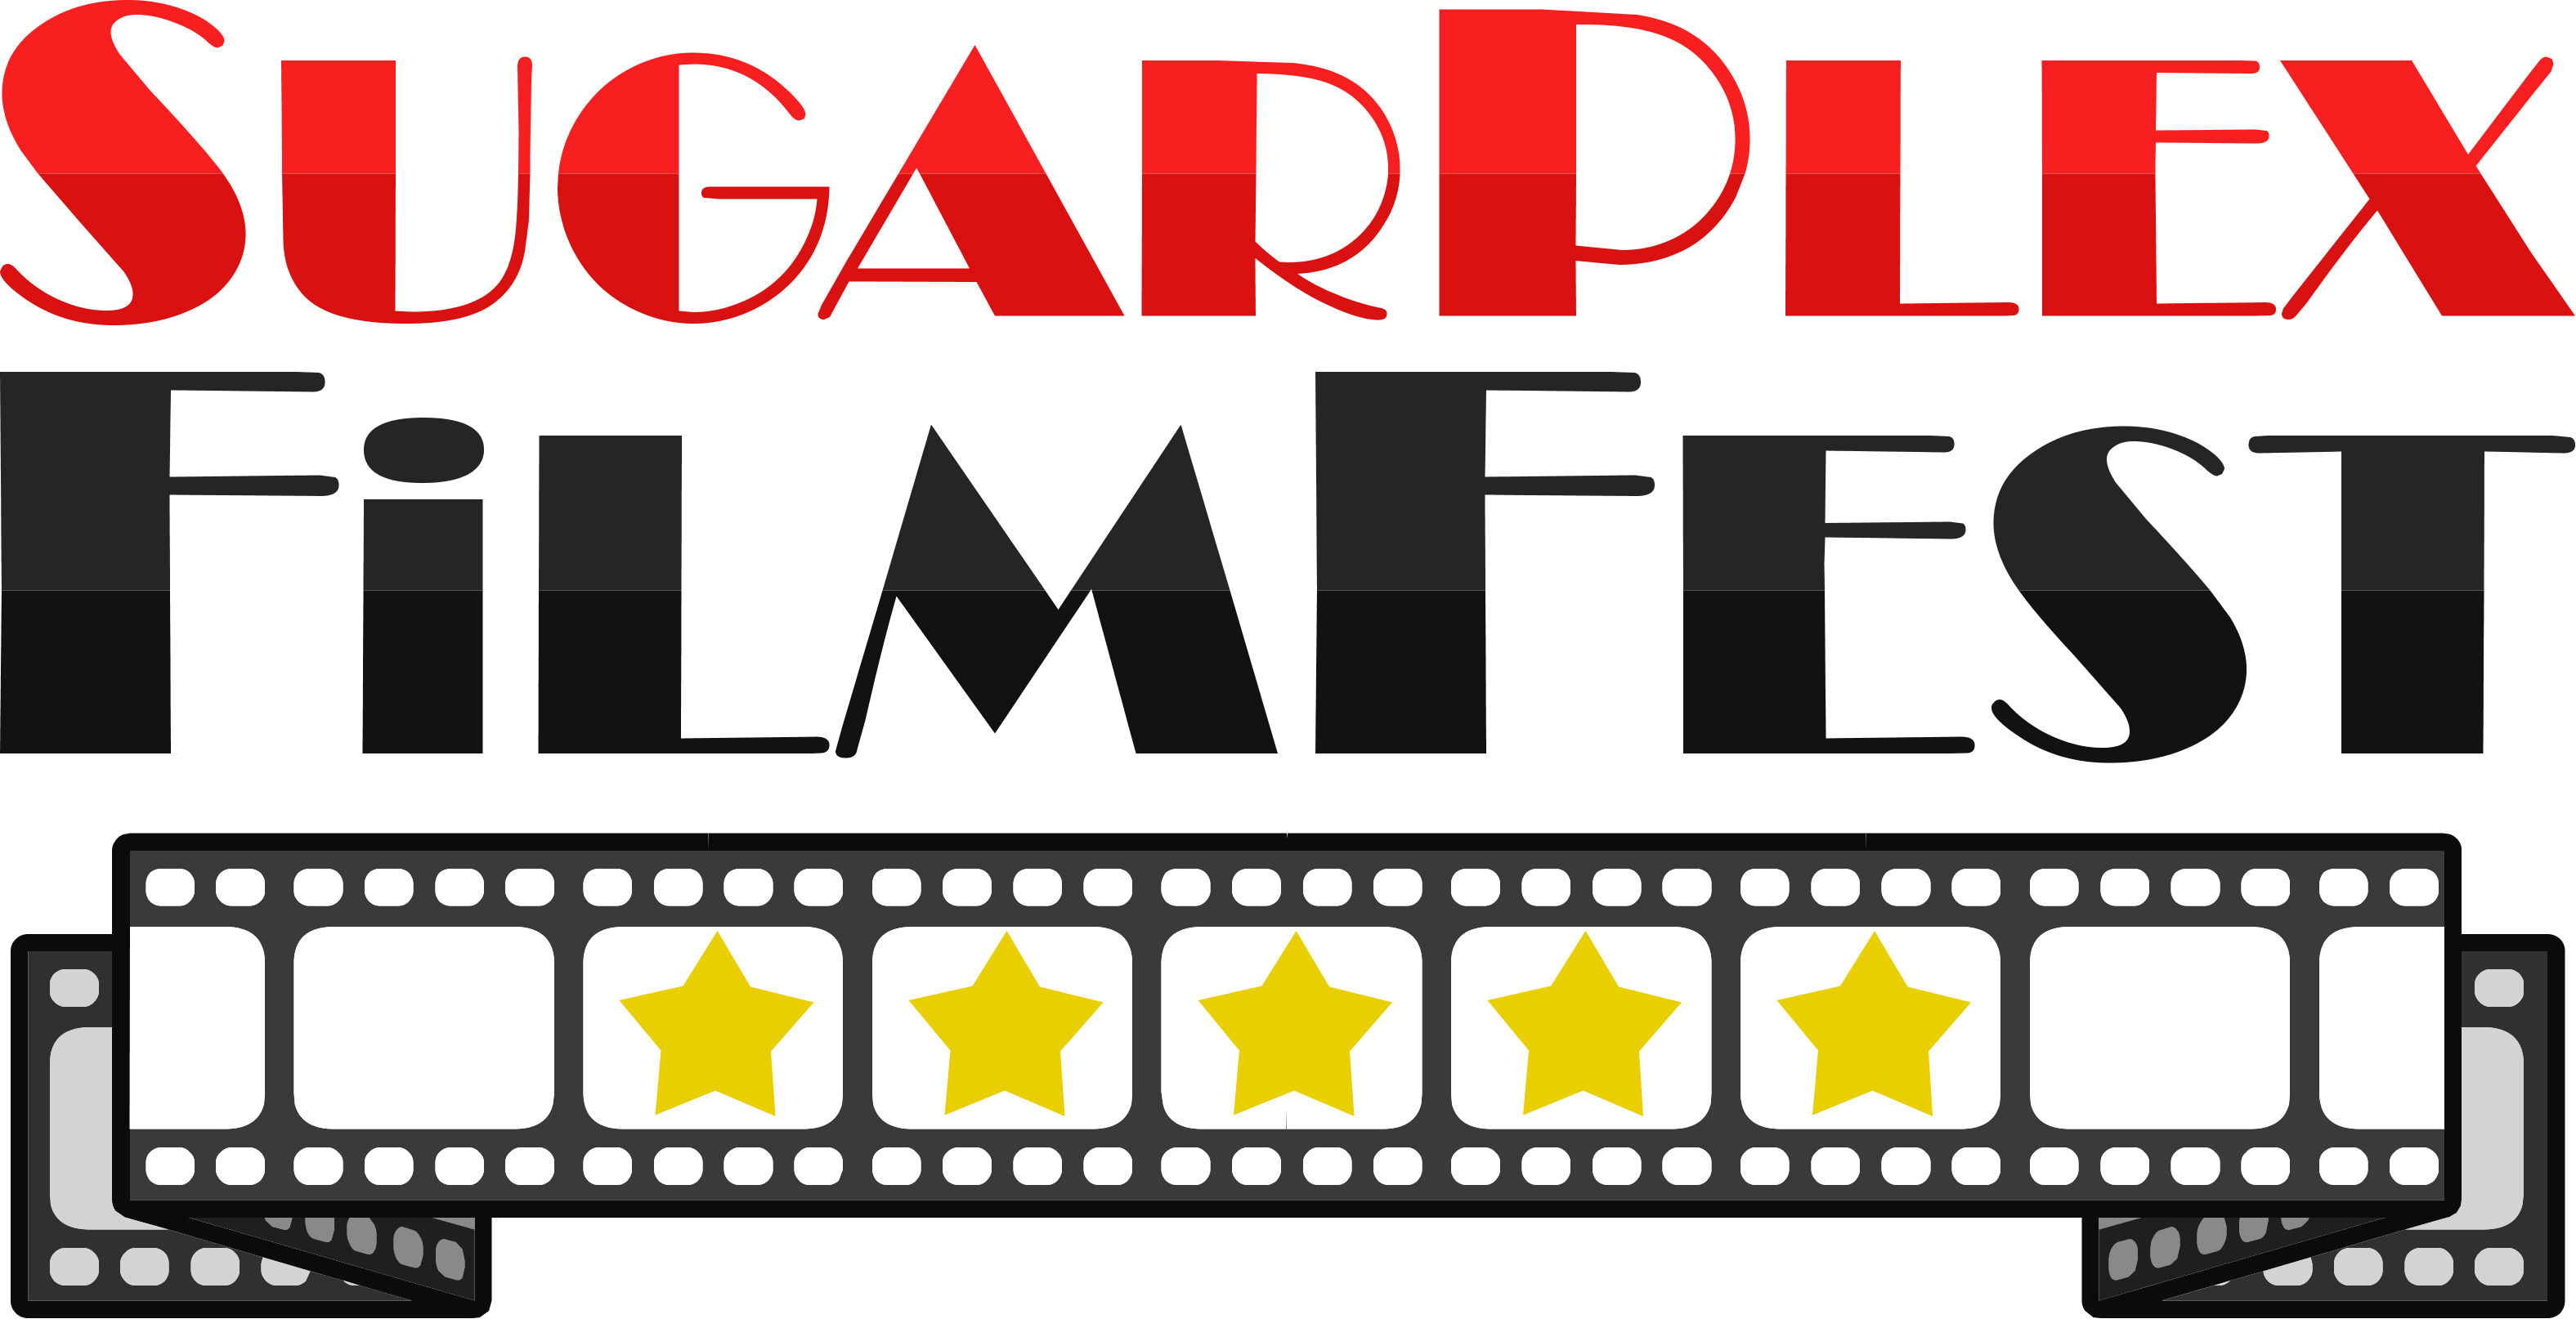 Sugarplex Film Fest, Flipline Studios Wiki